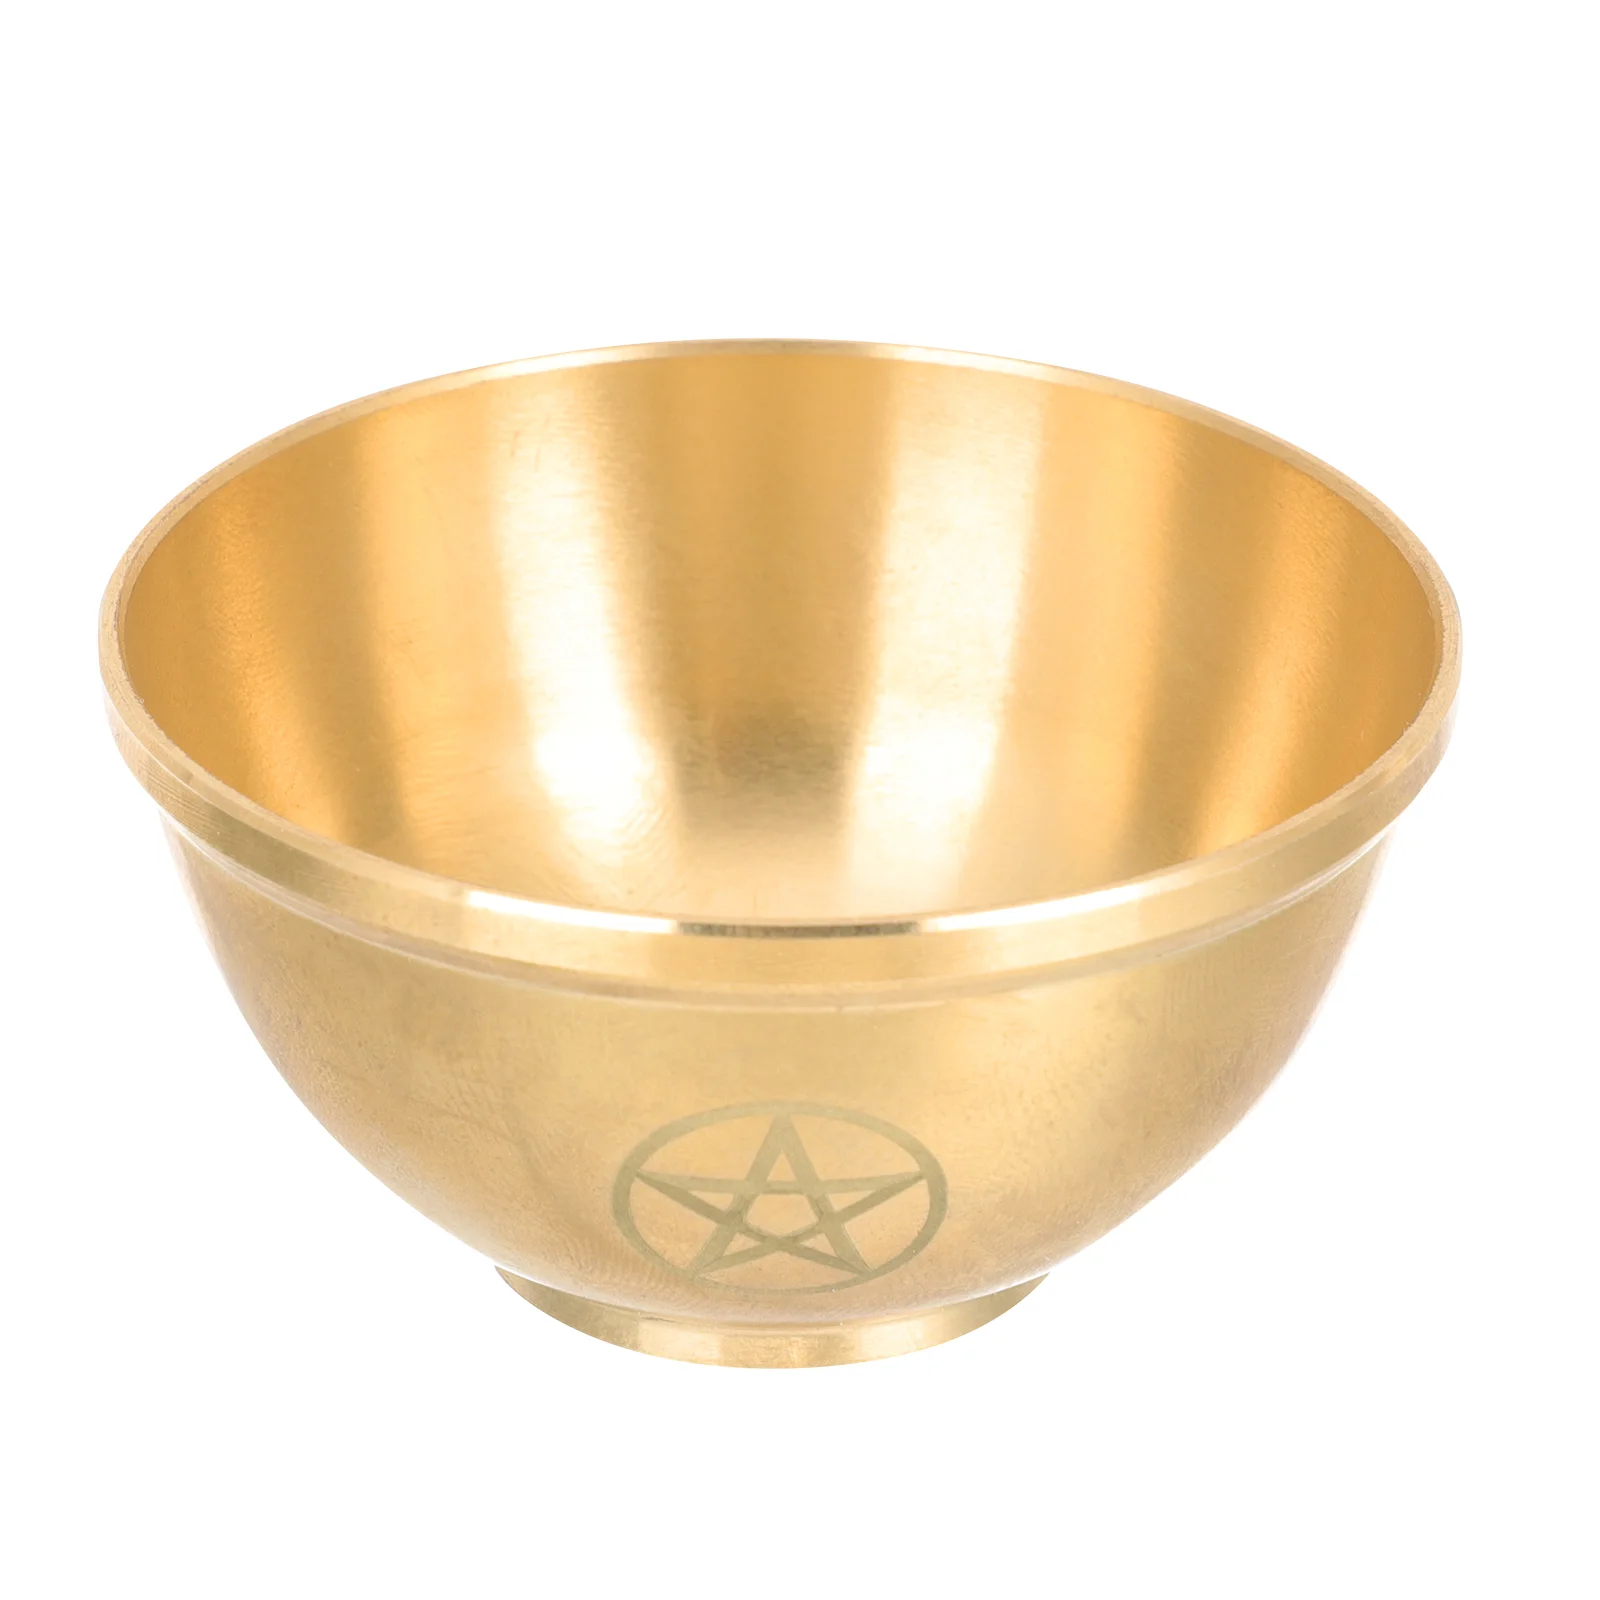 

Bowl Offering Brass Water Altar Worship Bowls Tibetan Ritualcopper Rice Sacrificialarticles Furnishing Pentagram Burner Chakras